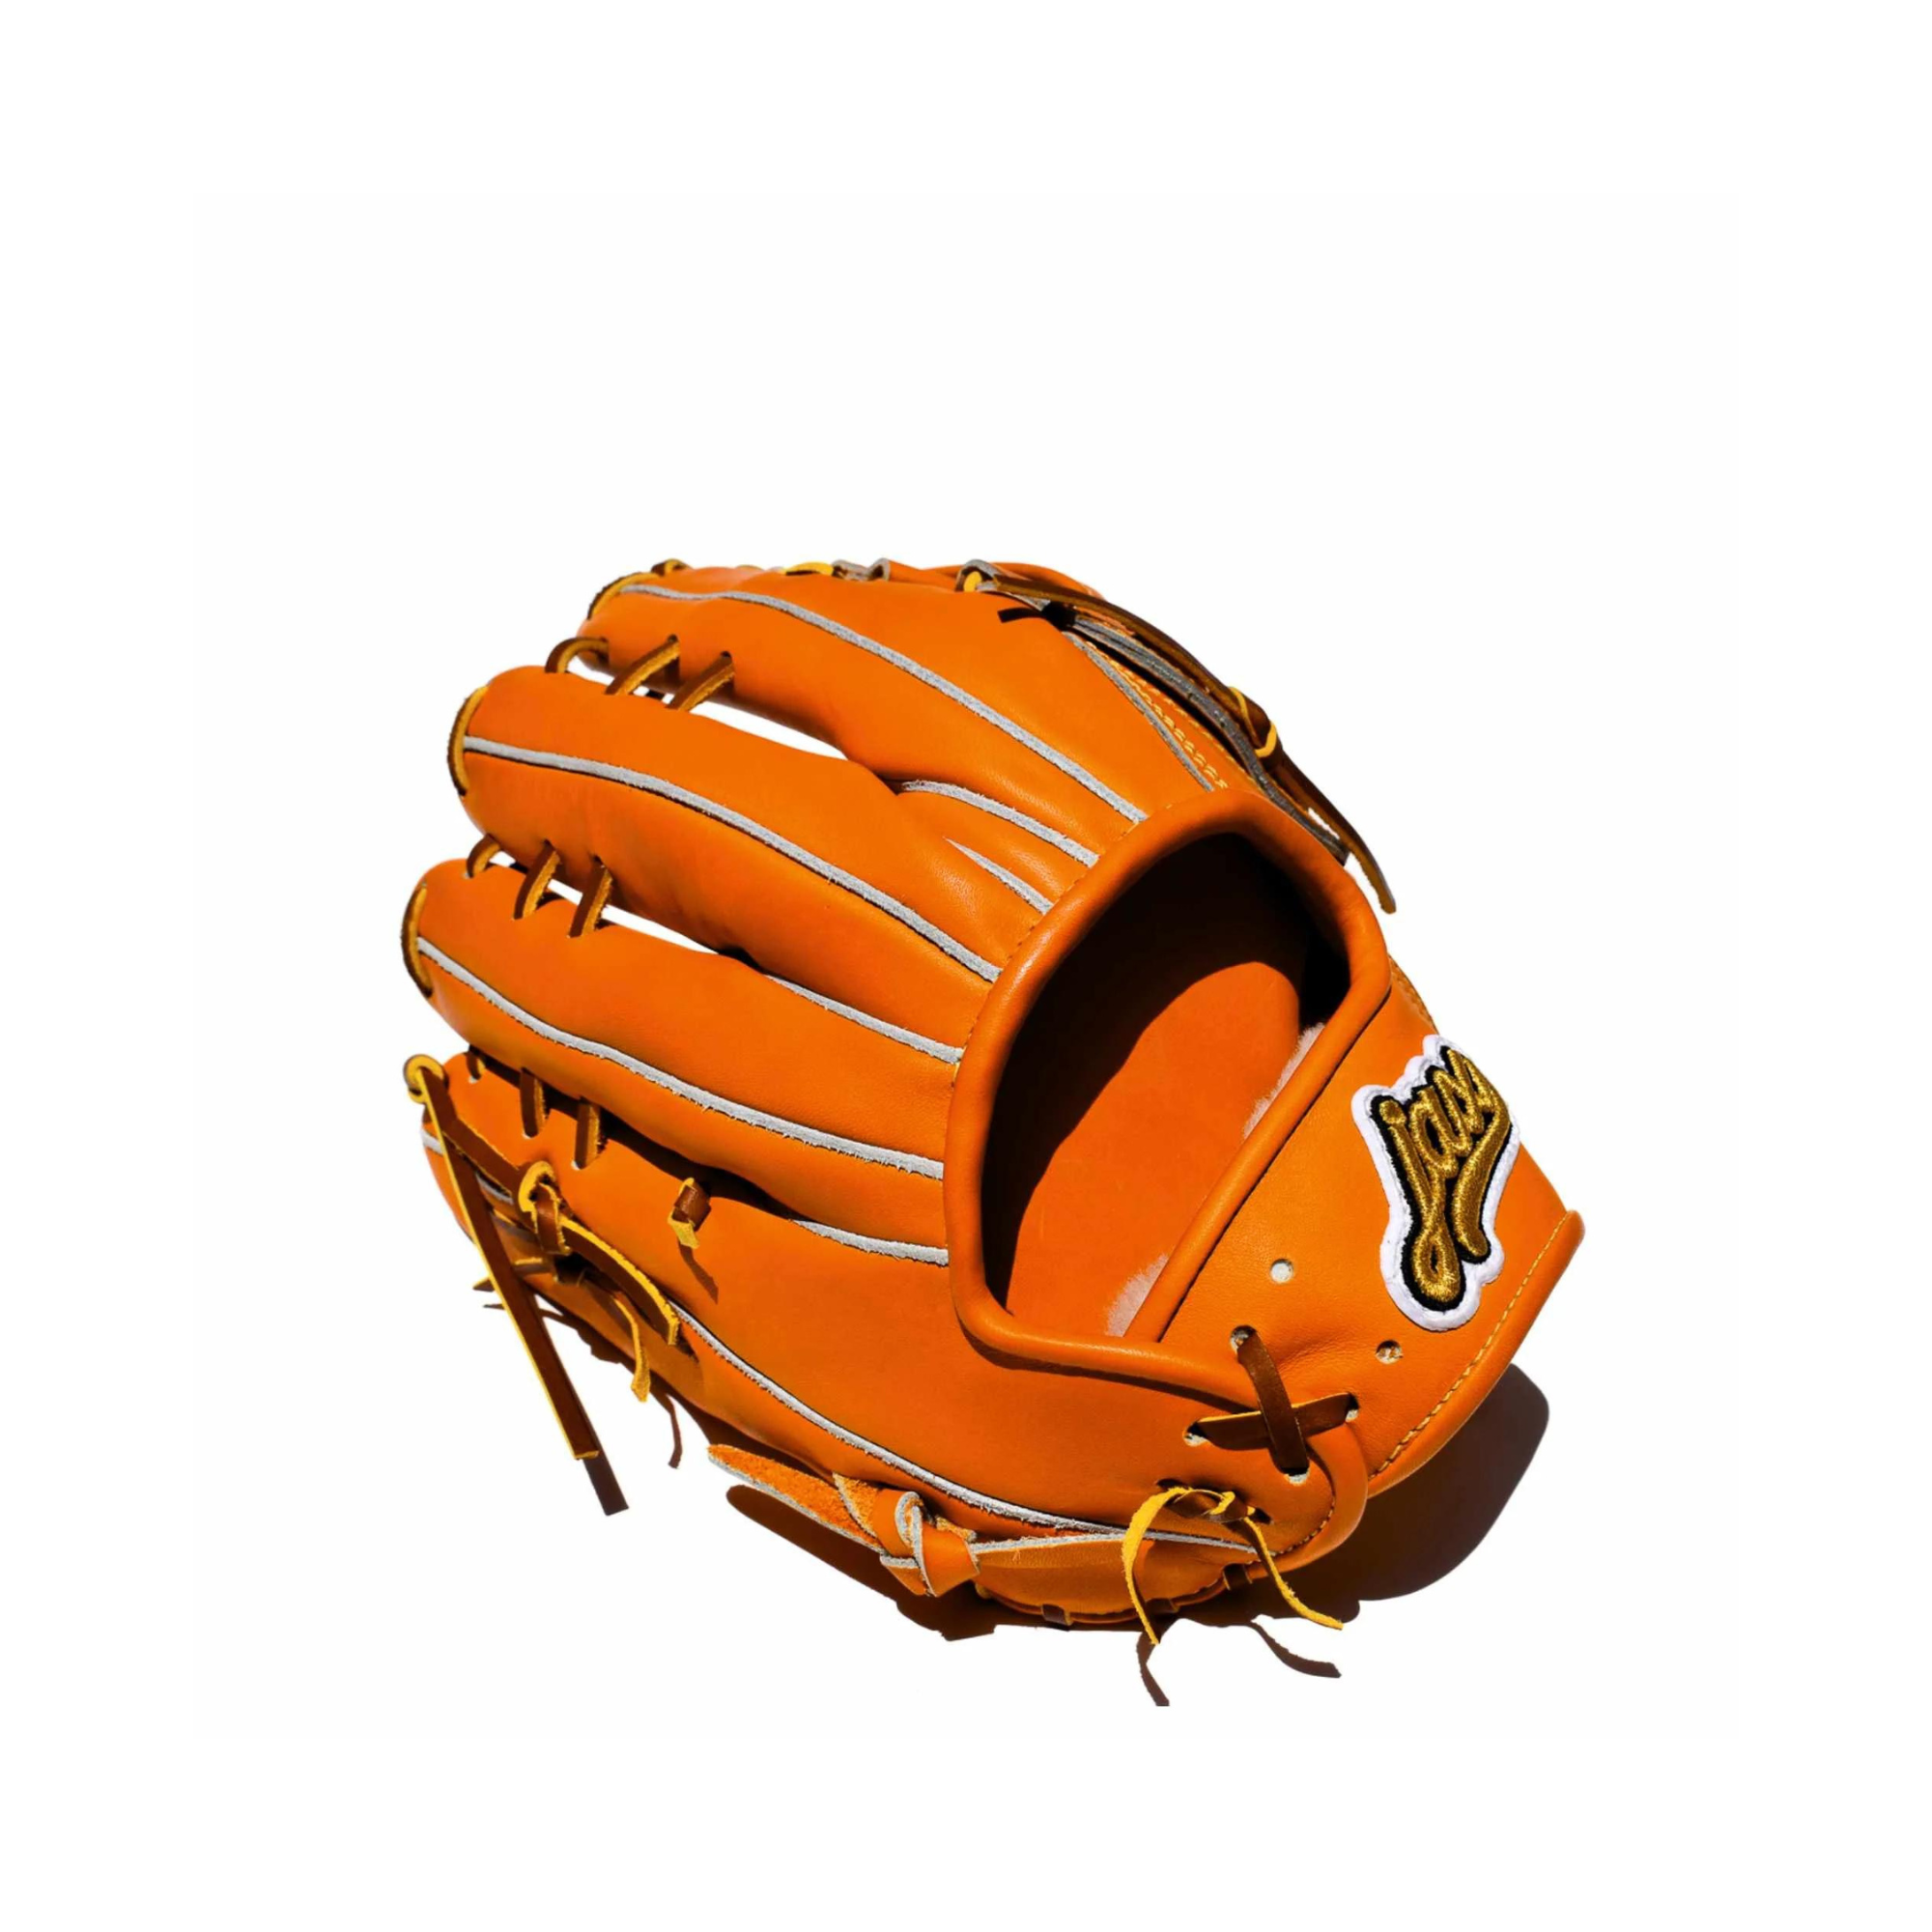 Jax Fielding Glove LJ-10S Infield/Outfield Orange Tan 12.25" RHT